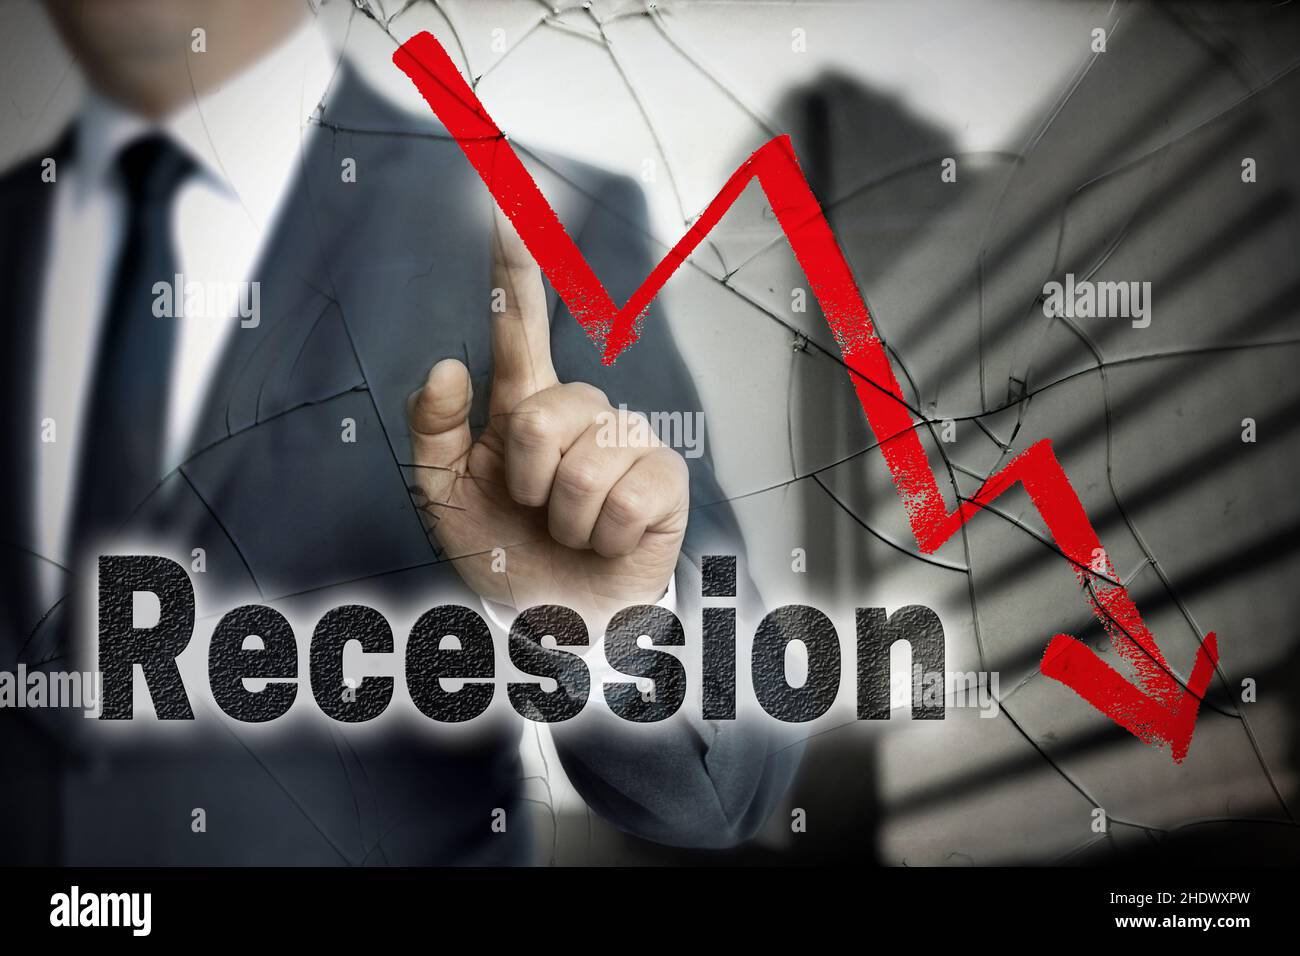 recession, downturn, stock market crash, recessions, downturns, failure, stock, stock market, stock market crashs, stocks, trade Stock Photo